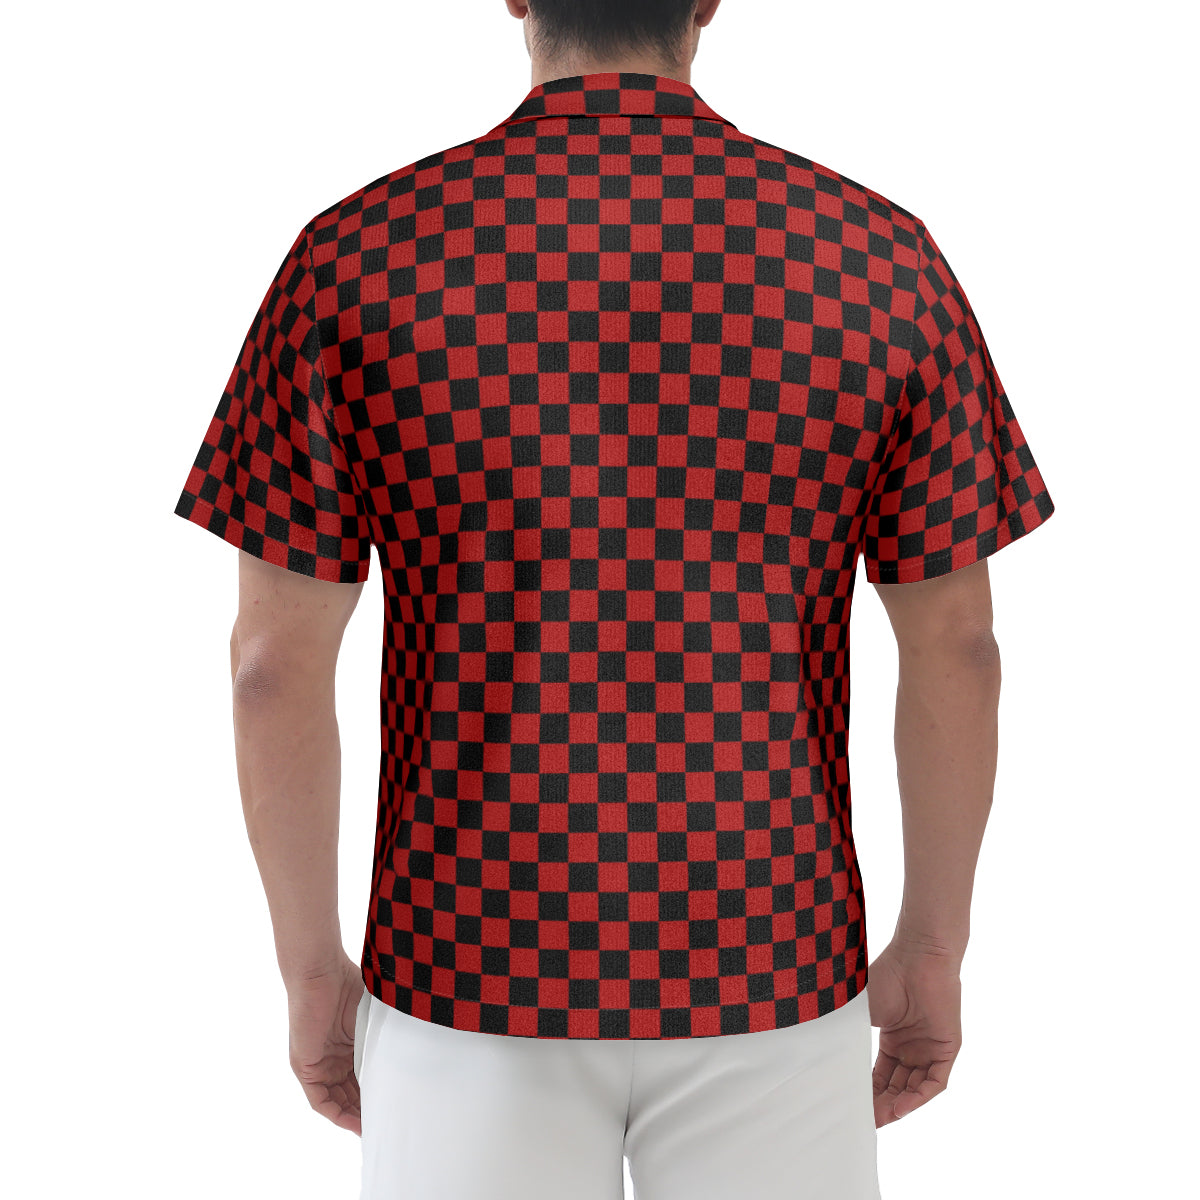 Men's Black and Red Checker Shirt, Vintage Style Checker Shirt, Retro Shirt Men, Checker Short Sleeve Shirt